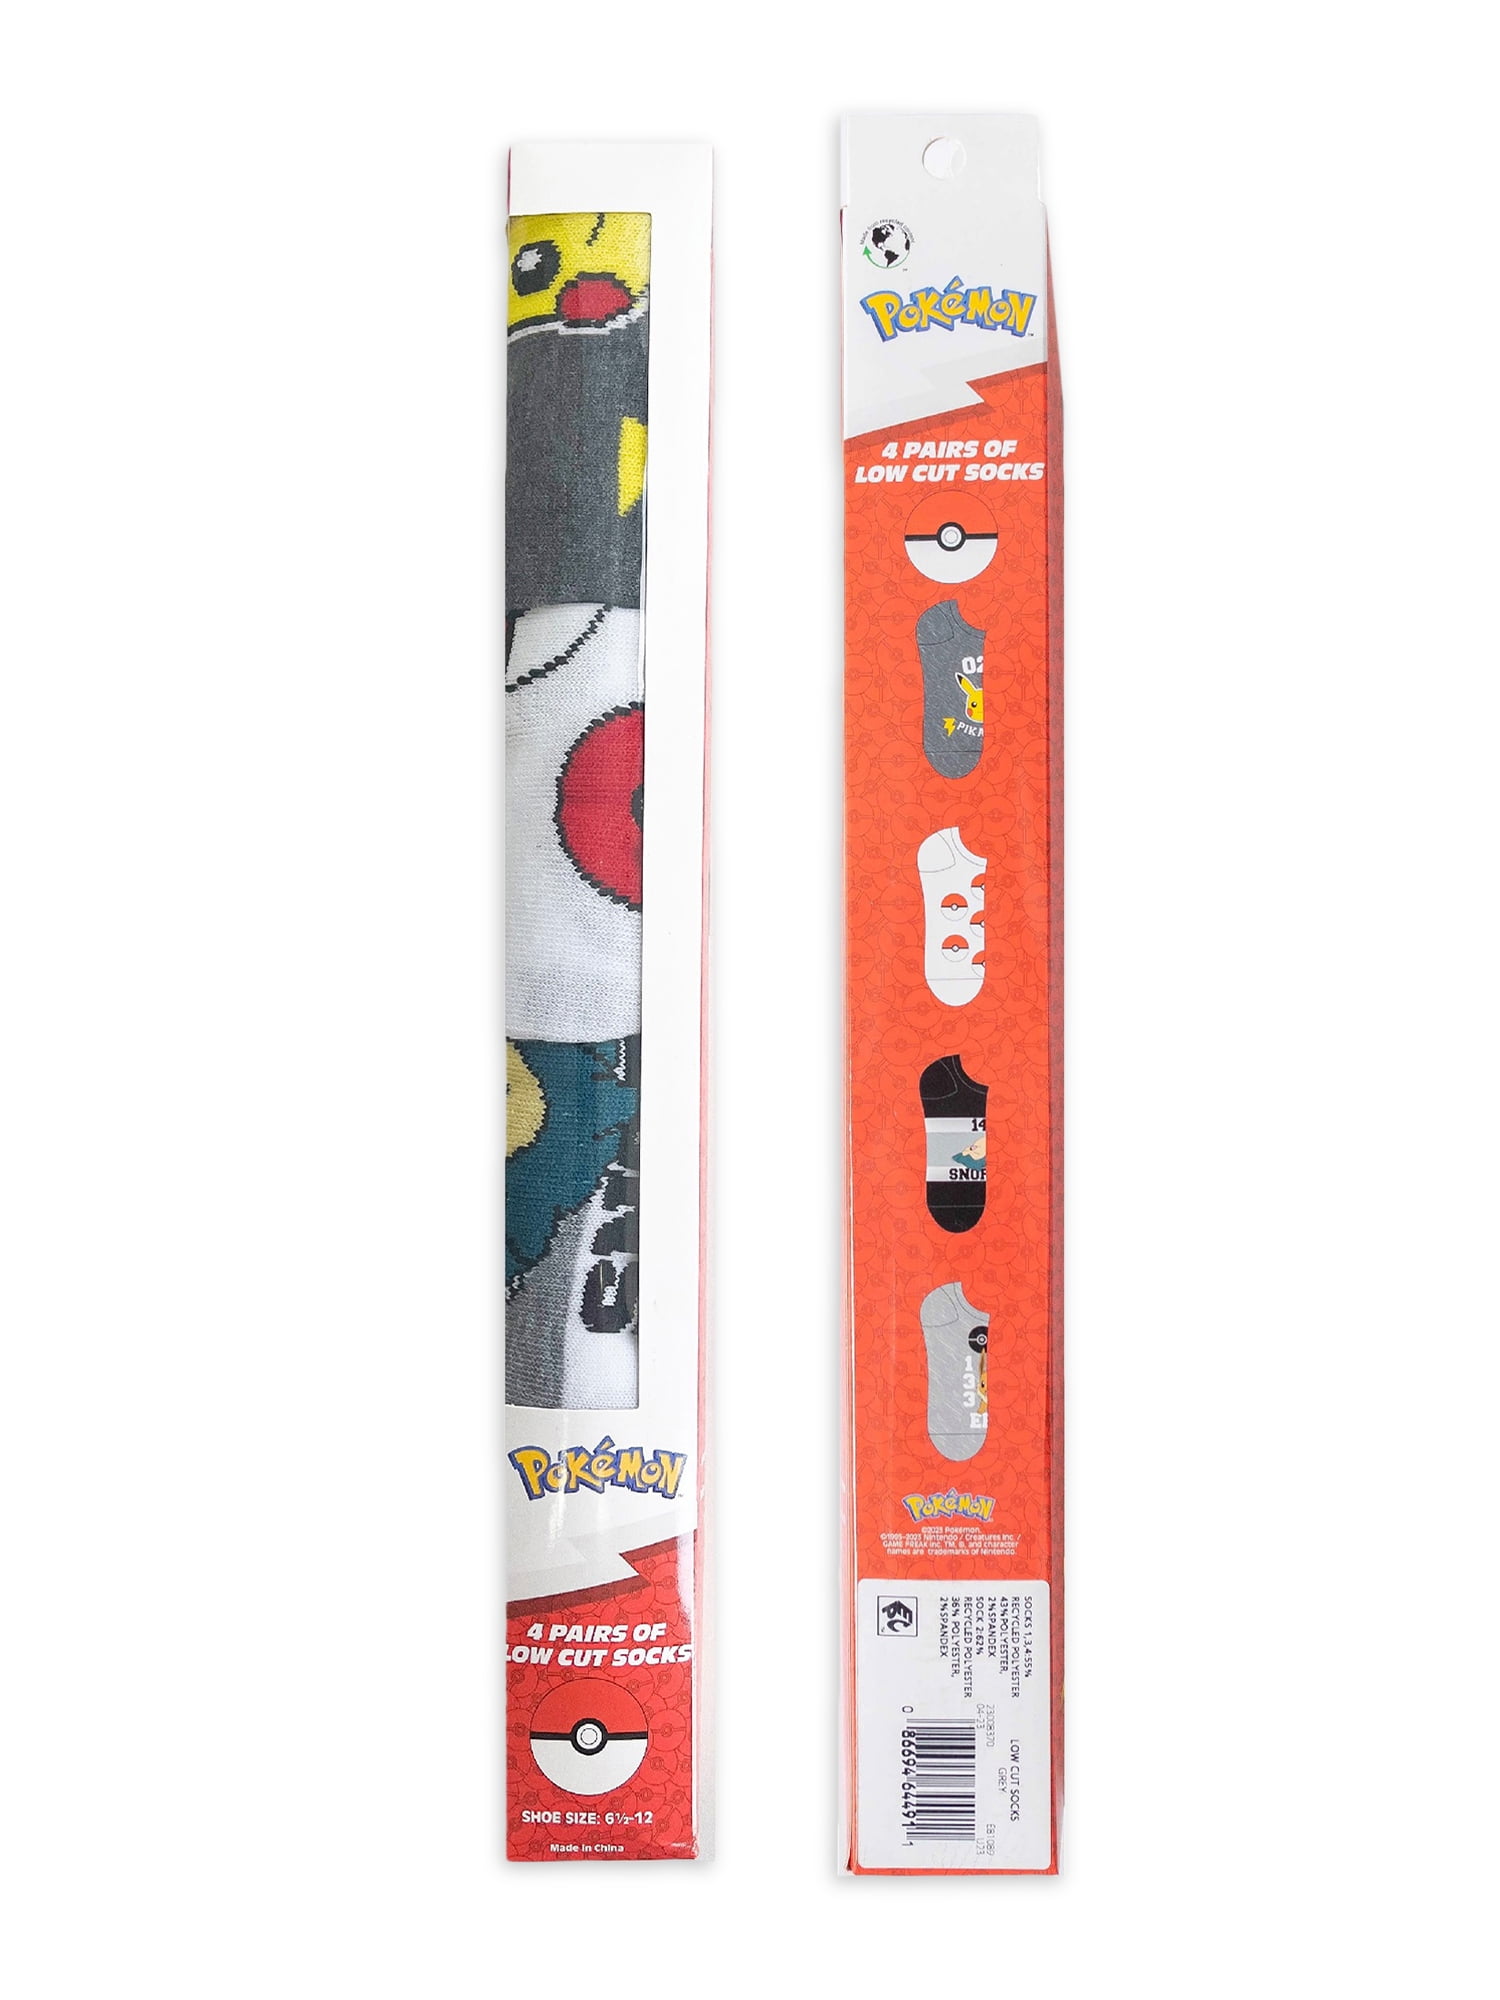 Pokemon, Men's Low Cut Socks Mystery Gift Box, 4-Pack, Size 6.5-12 